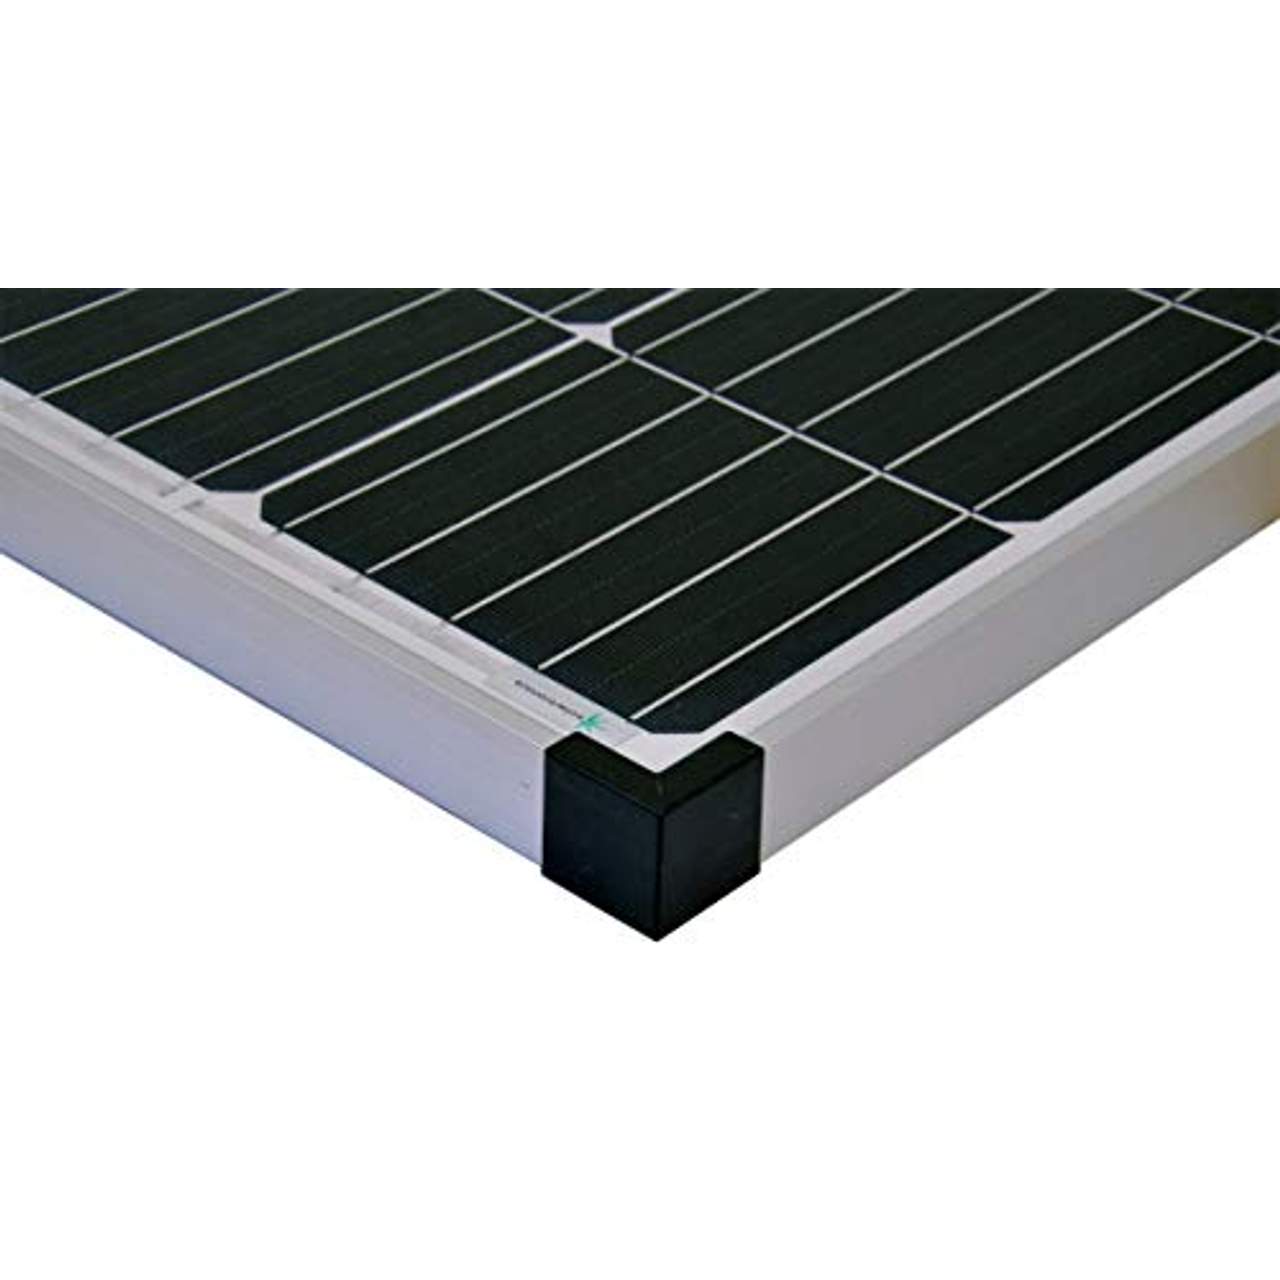 solartronics Komplettset 3x130 Watt Solarmodul Laderegler Photovoltaik